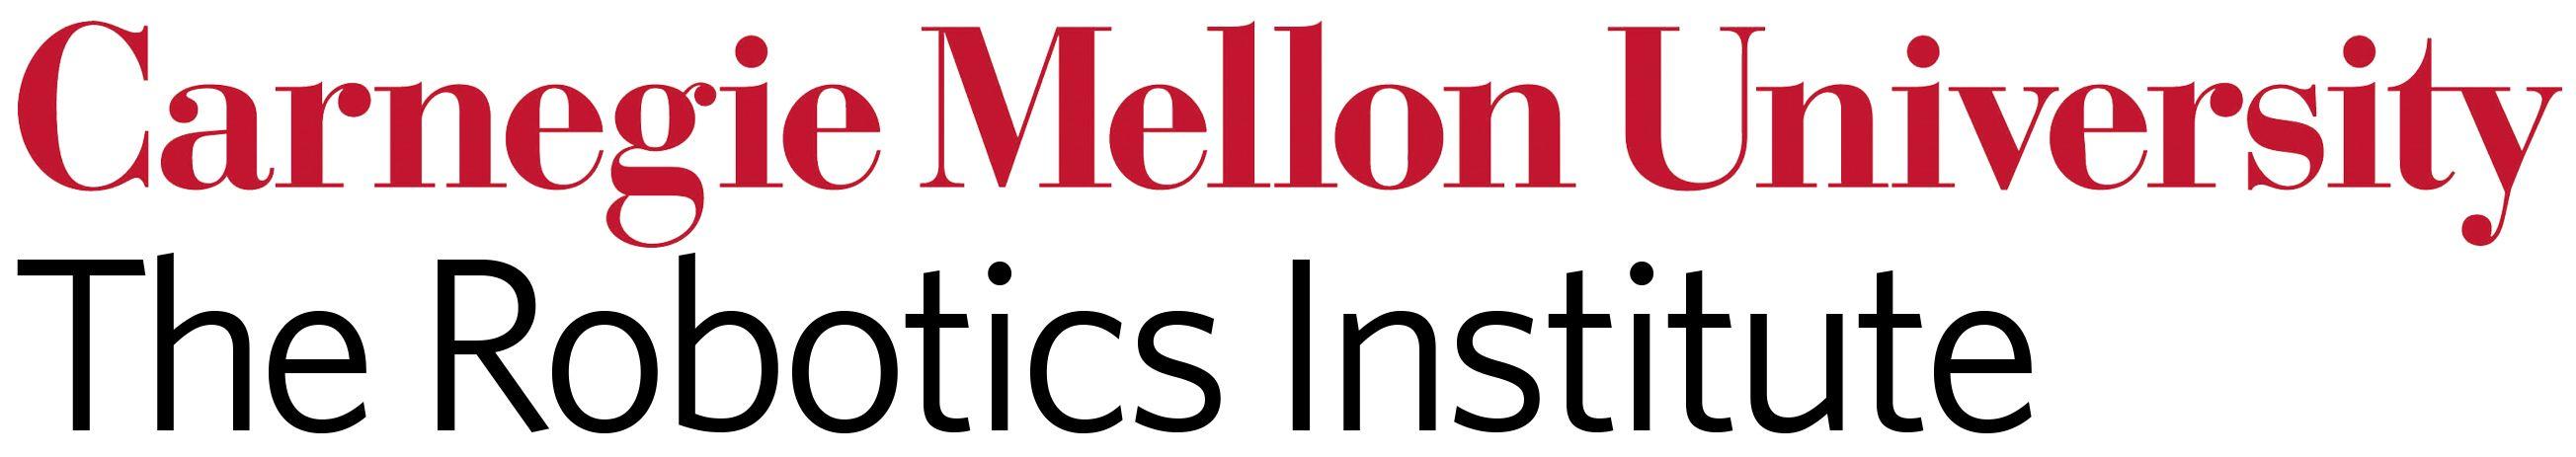 Carnegie Mellon Logo - RI Logos - The Robotics Institute Carnegie Mellon University